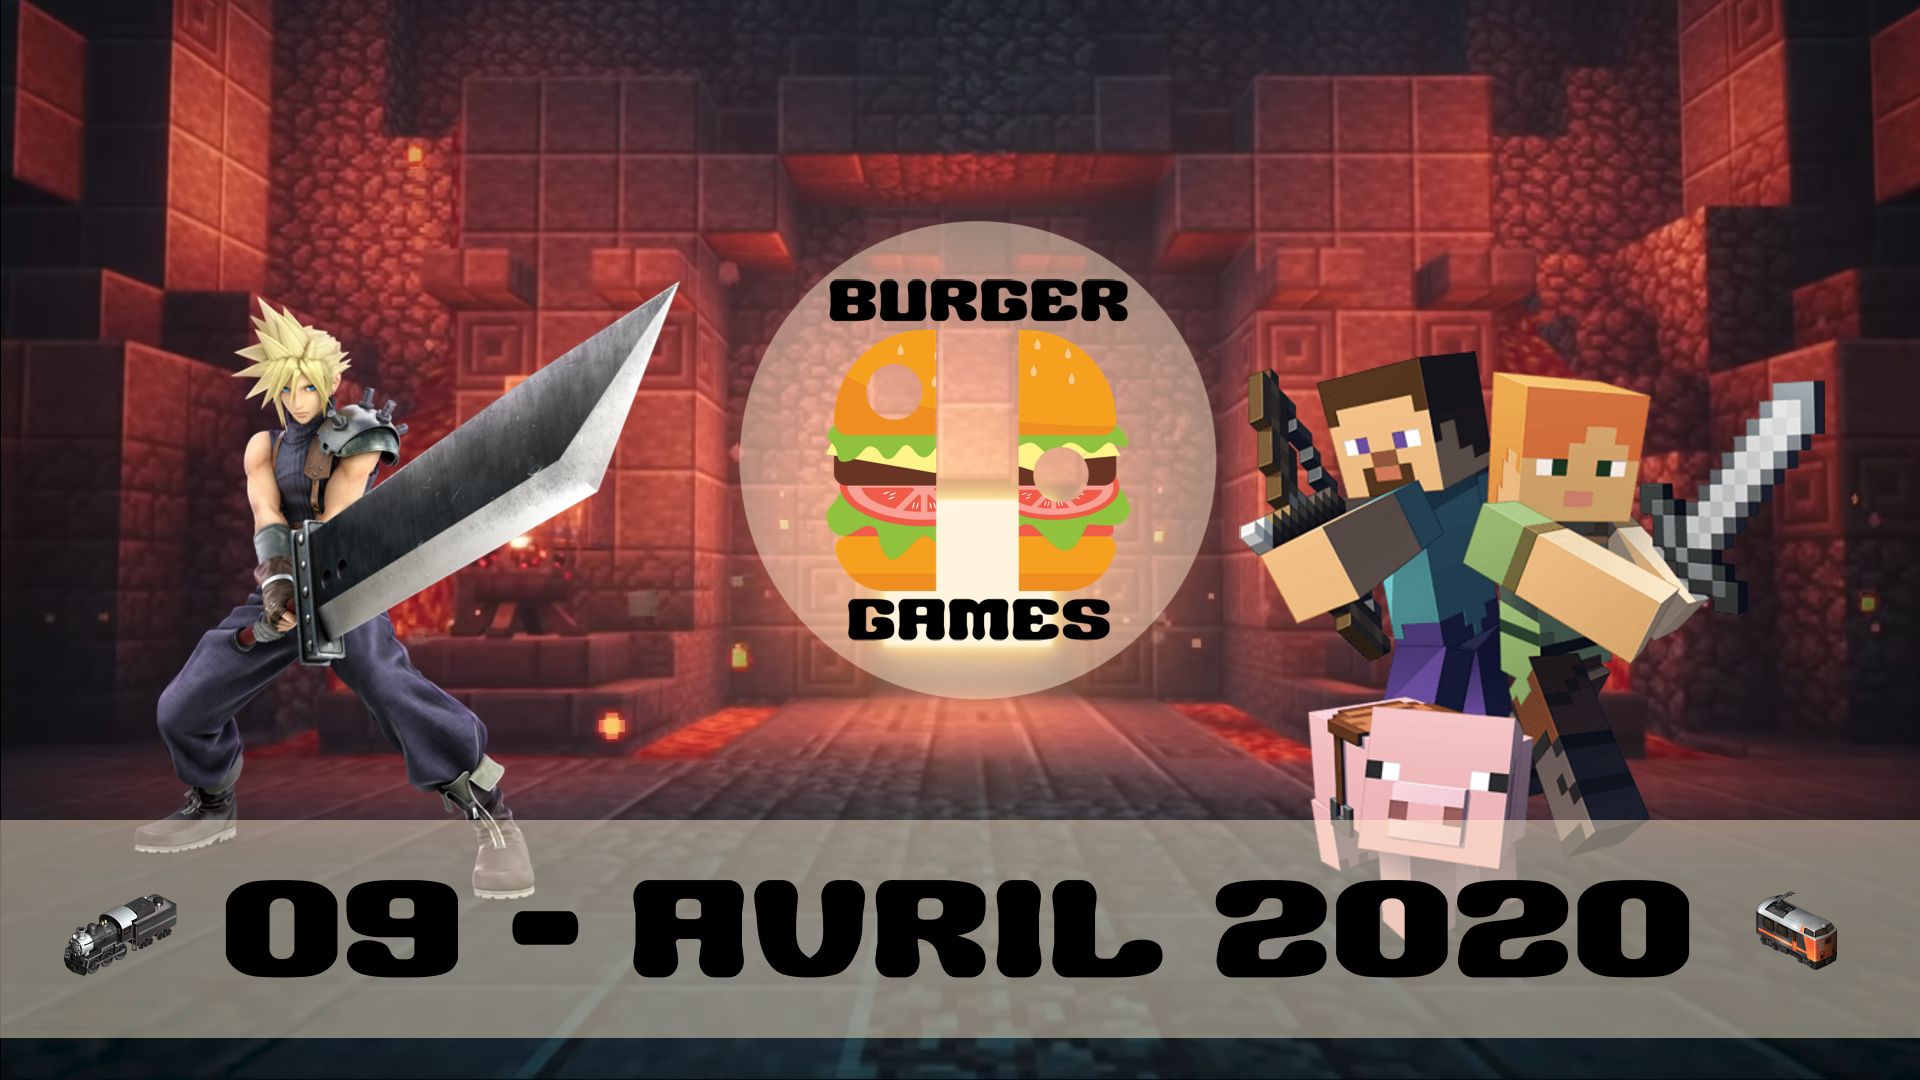 Burger Games - 09